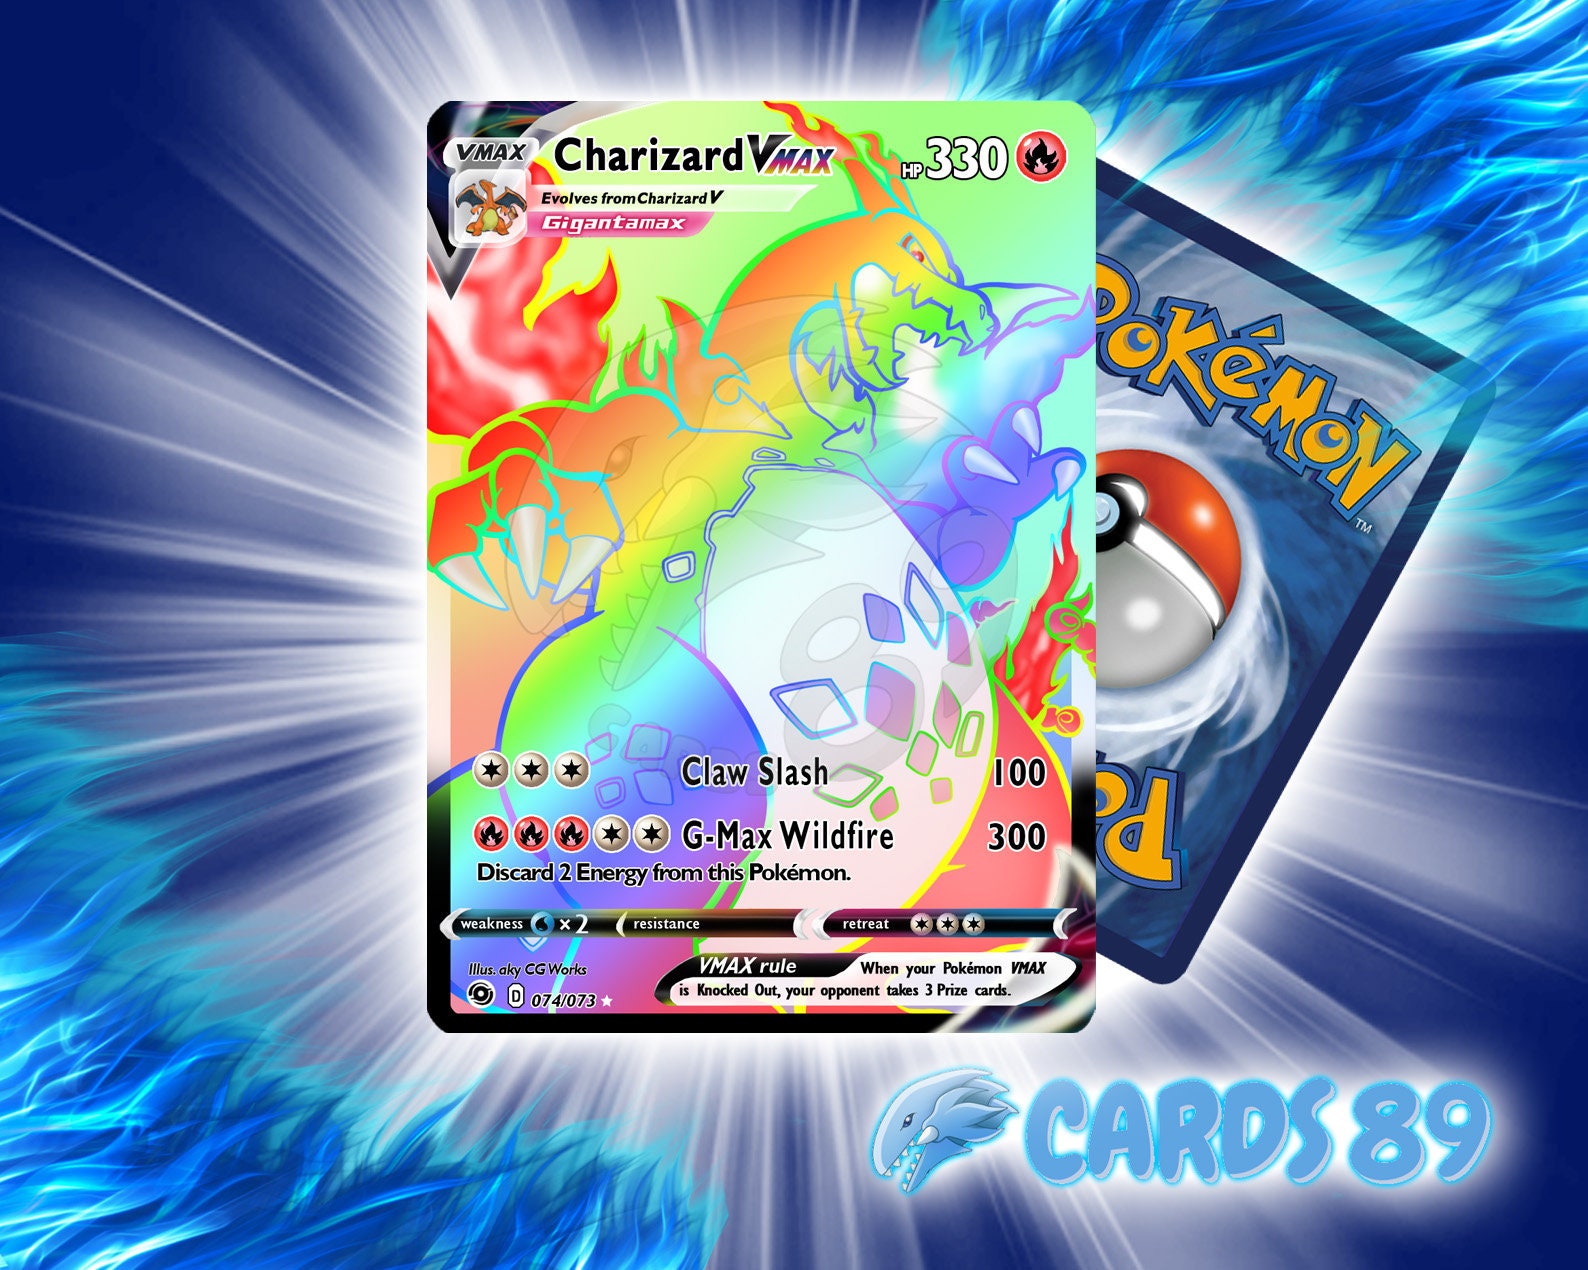 Carte Pokémon PIKACHU-VMAX Gigamax Rainbow Rare Secrète - 188/185